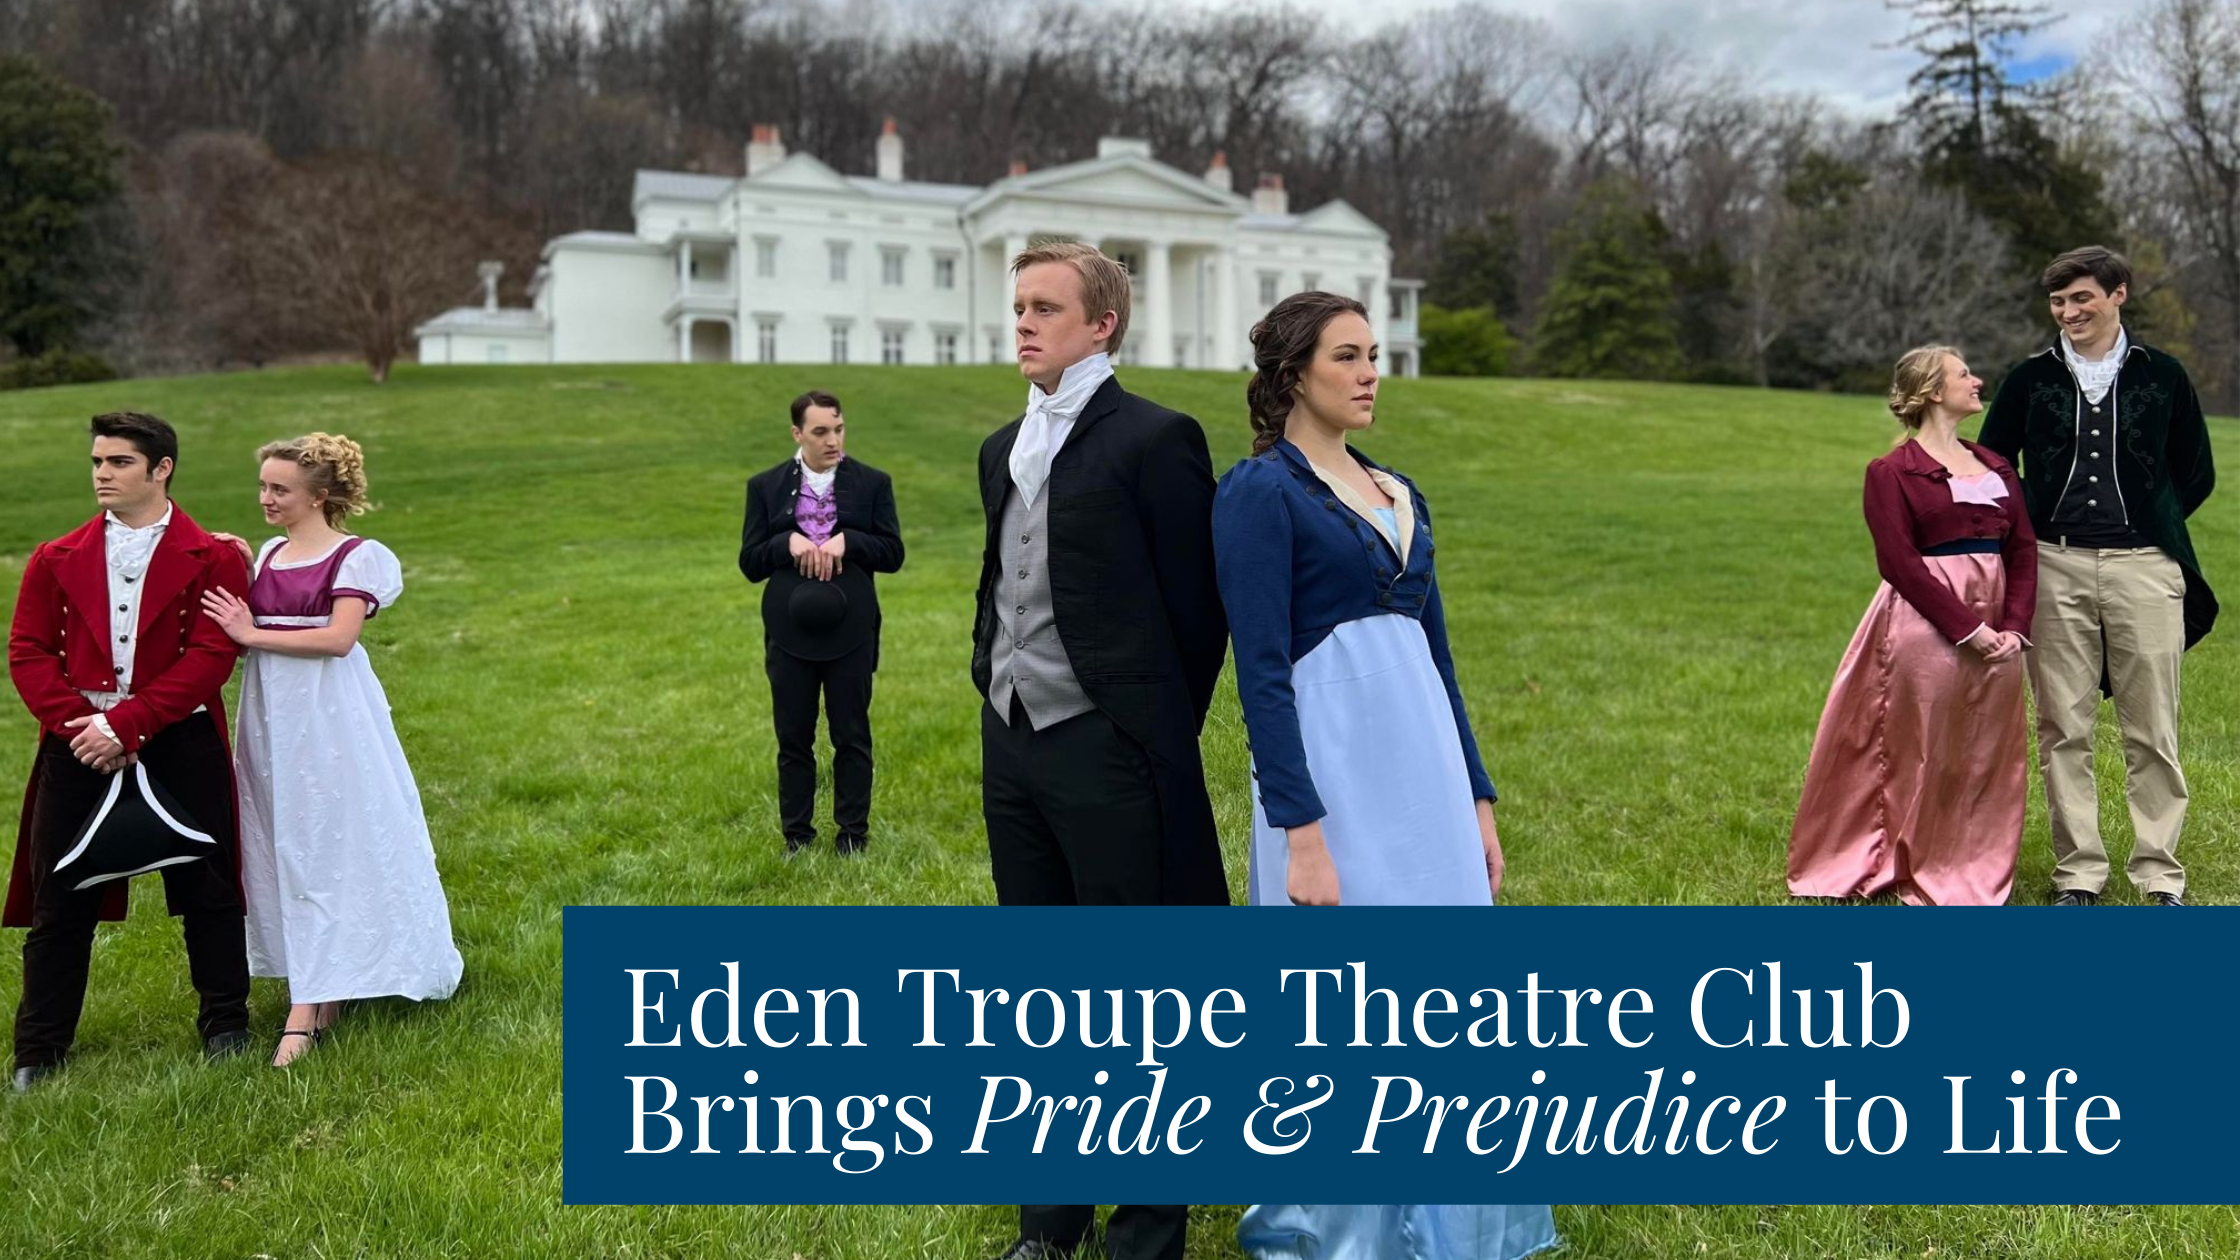 Eden Troupe Theatre Club brings Pride & Prejudice to Life